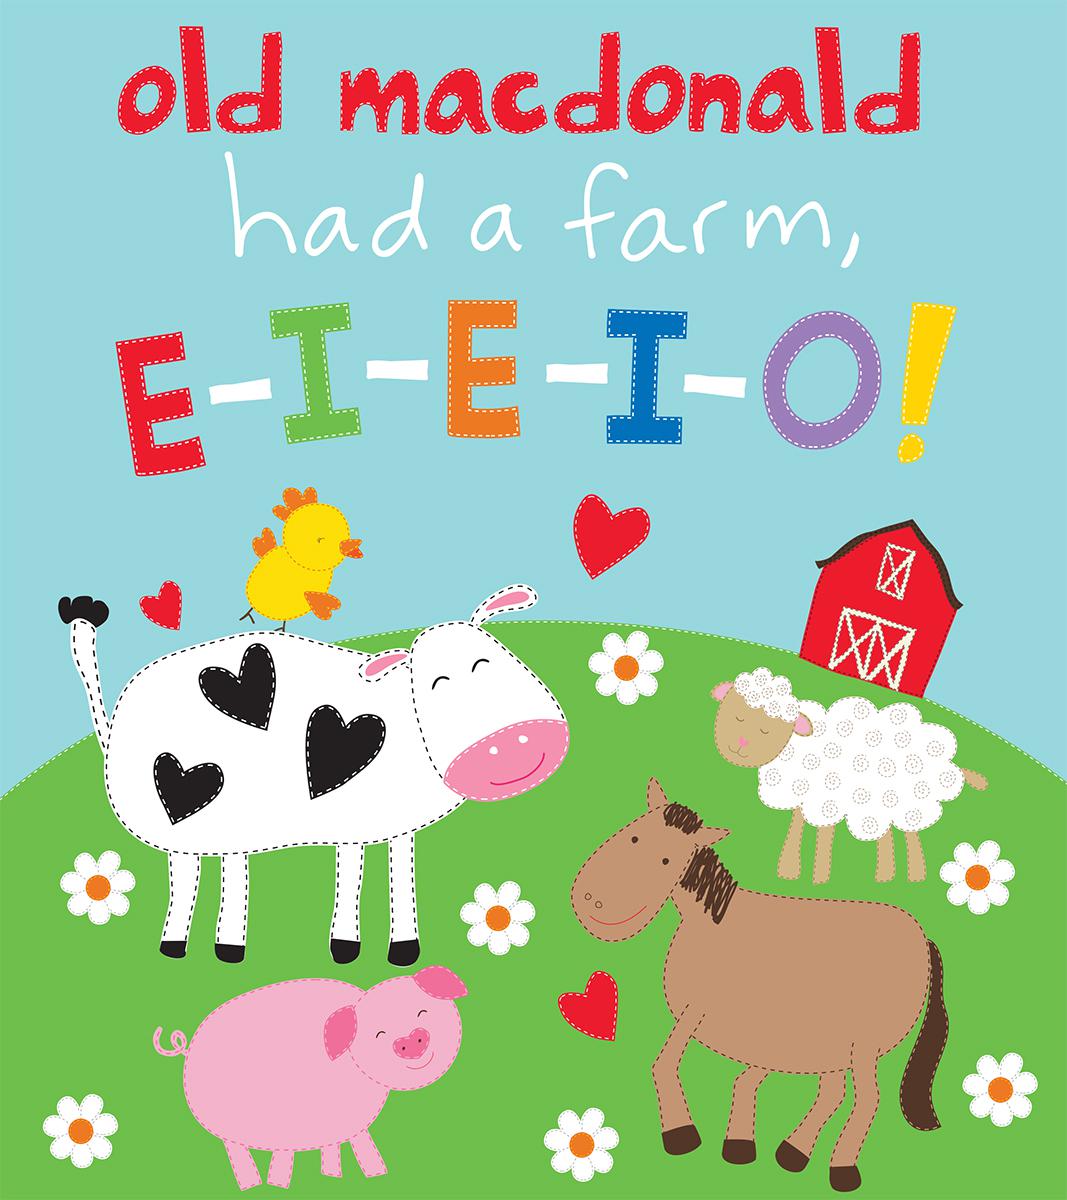 I Love Old Macdonald's Farm | Scholastic Canada